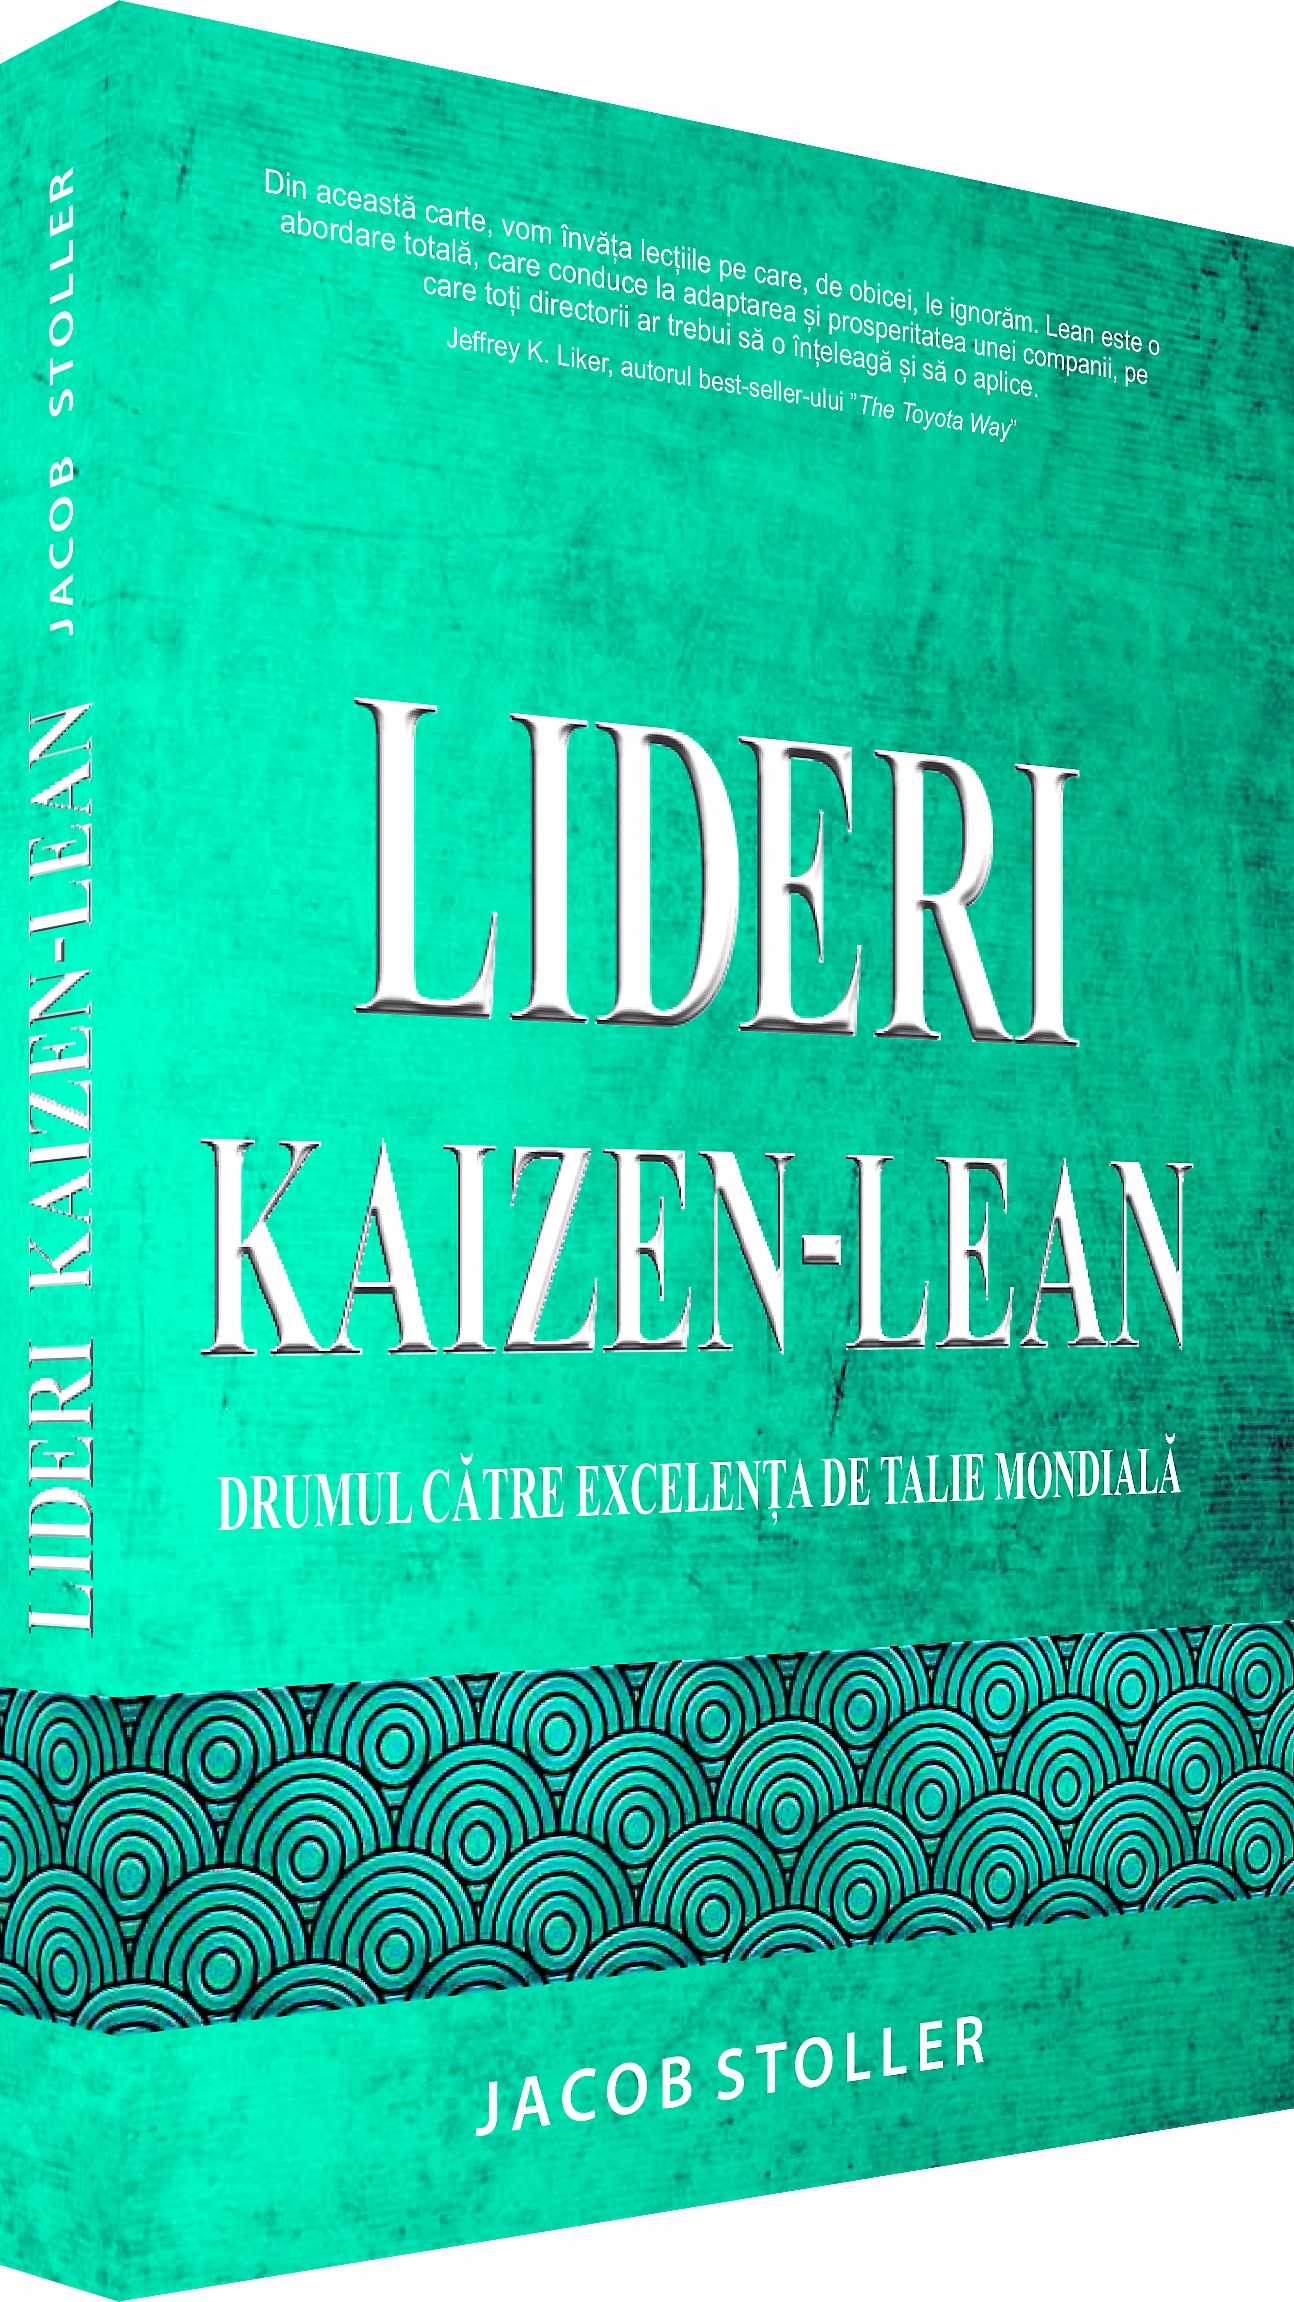 Lideri Kaizen-Lean - Jacob Stoller